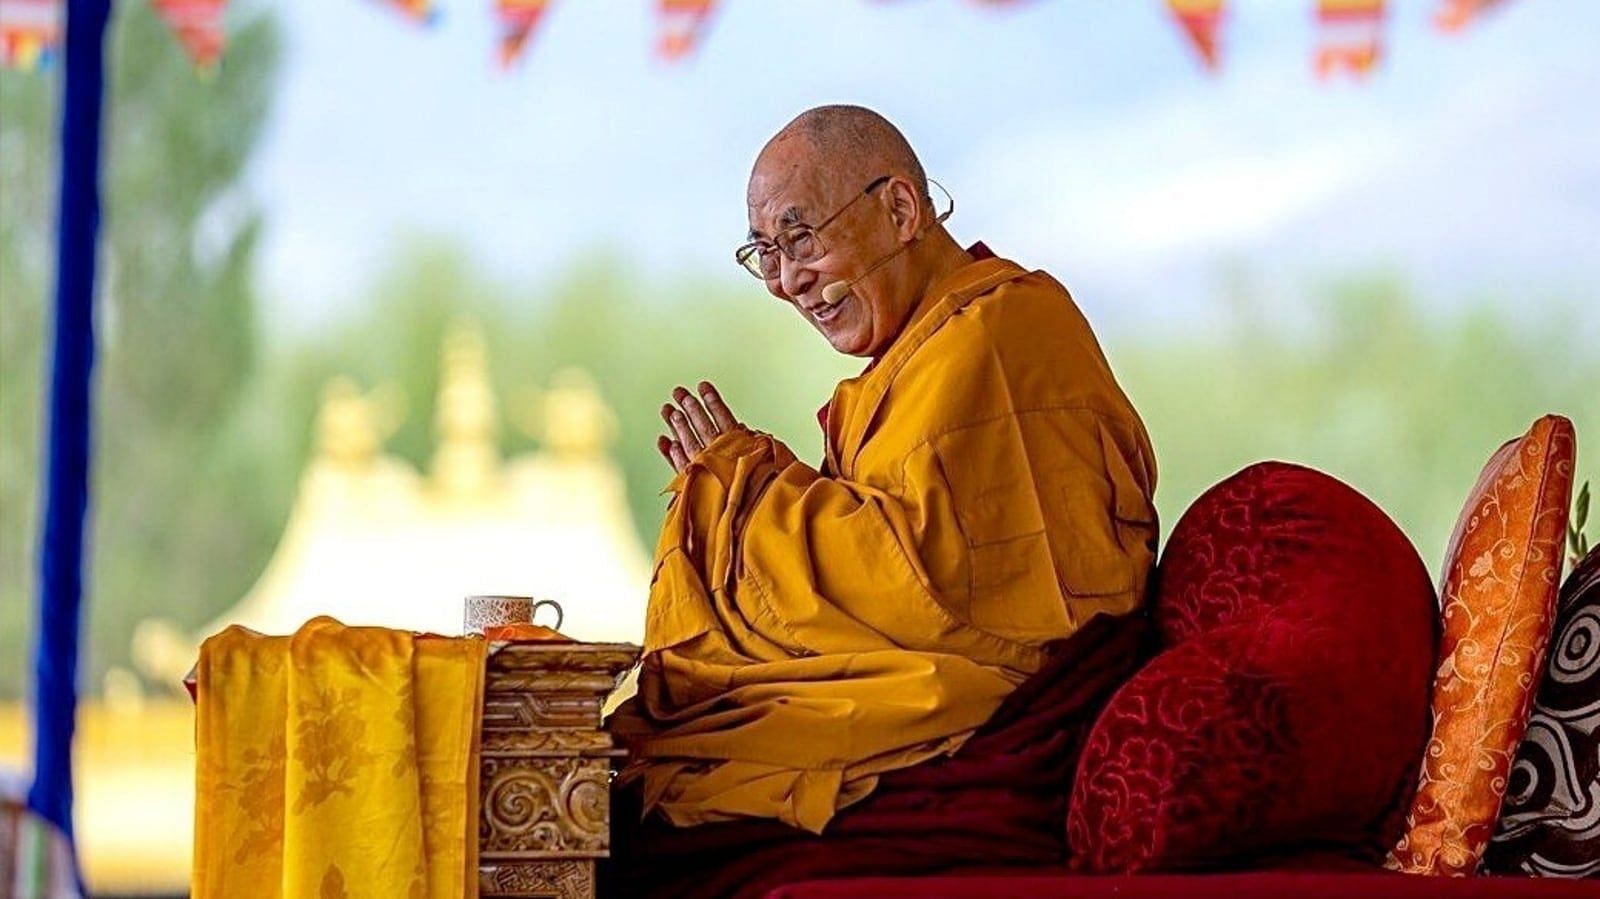 Social media users reacted to Dalai Lama